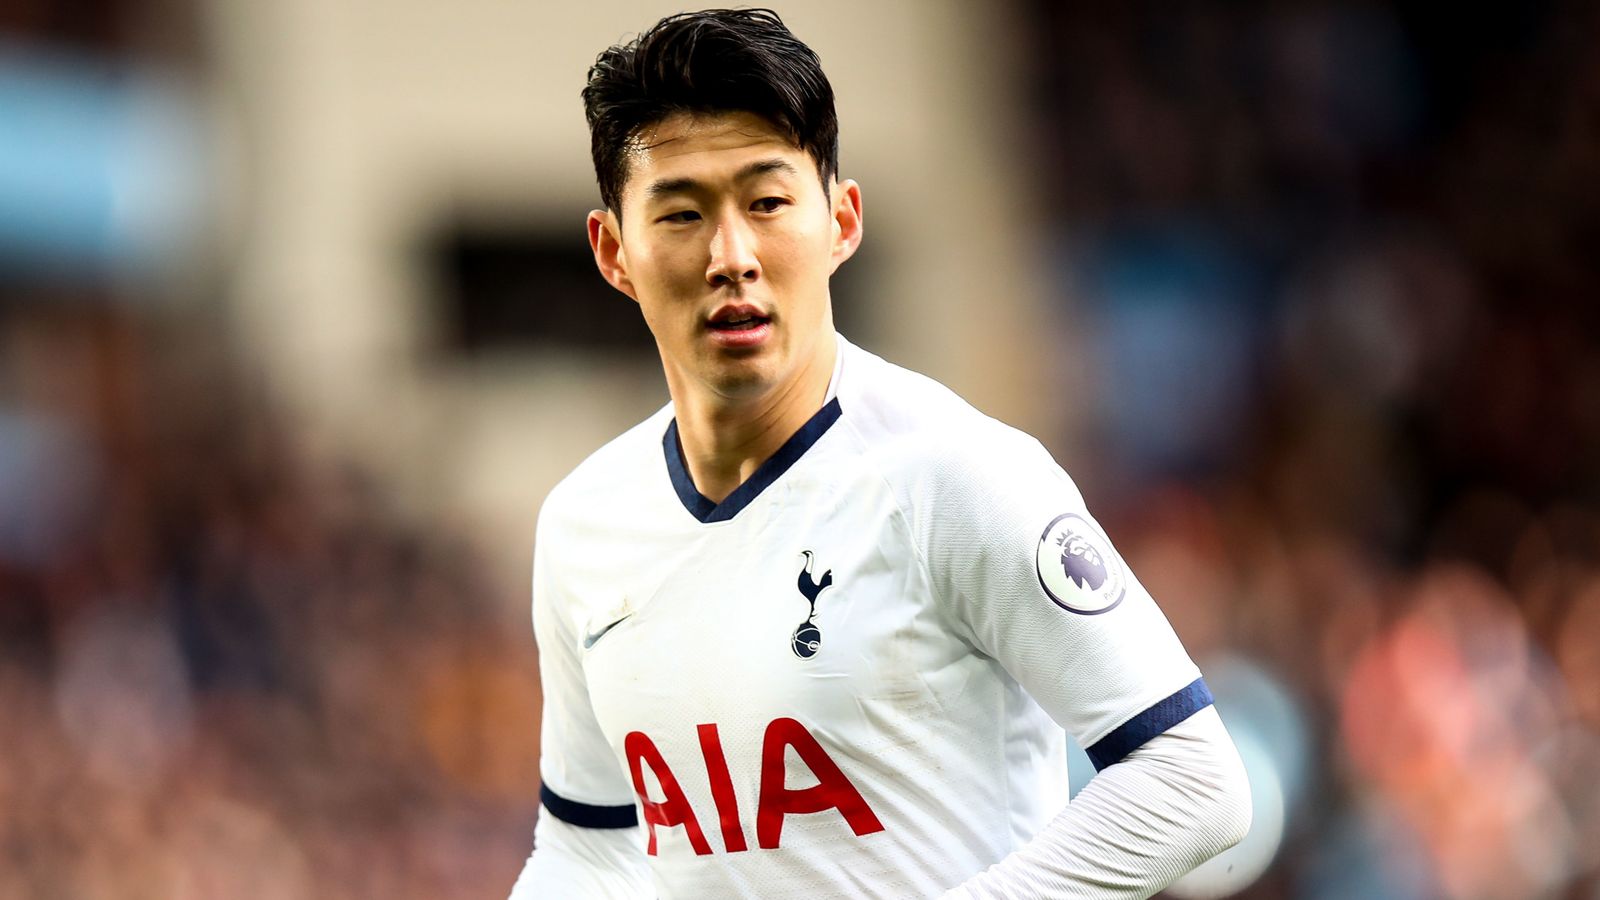 Tottenham's Heung-Min Son asks fans not to break coronavirus guidelines  ahead of military service | Football News | Sky Sports